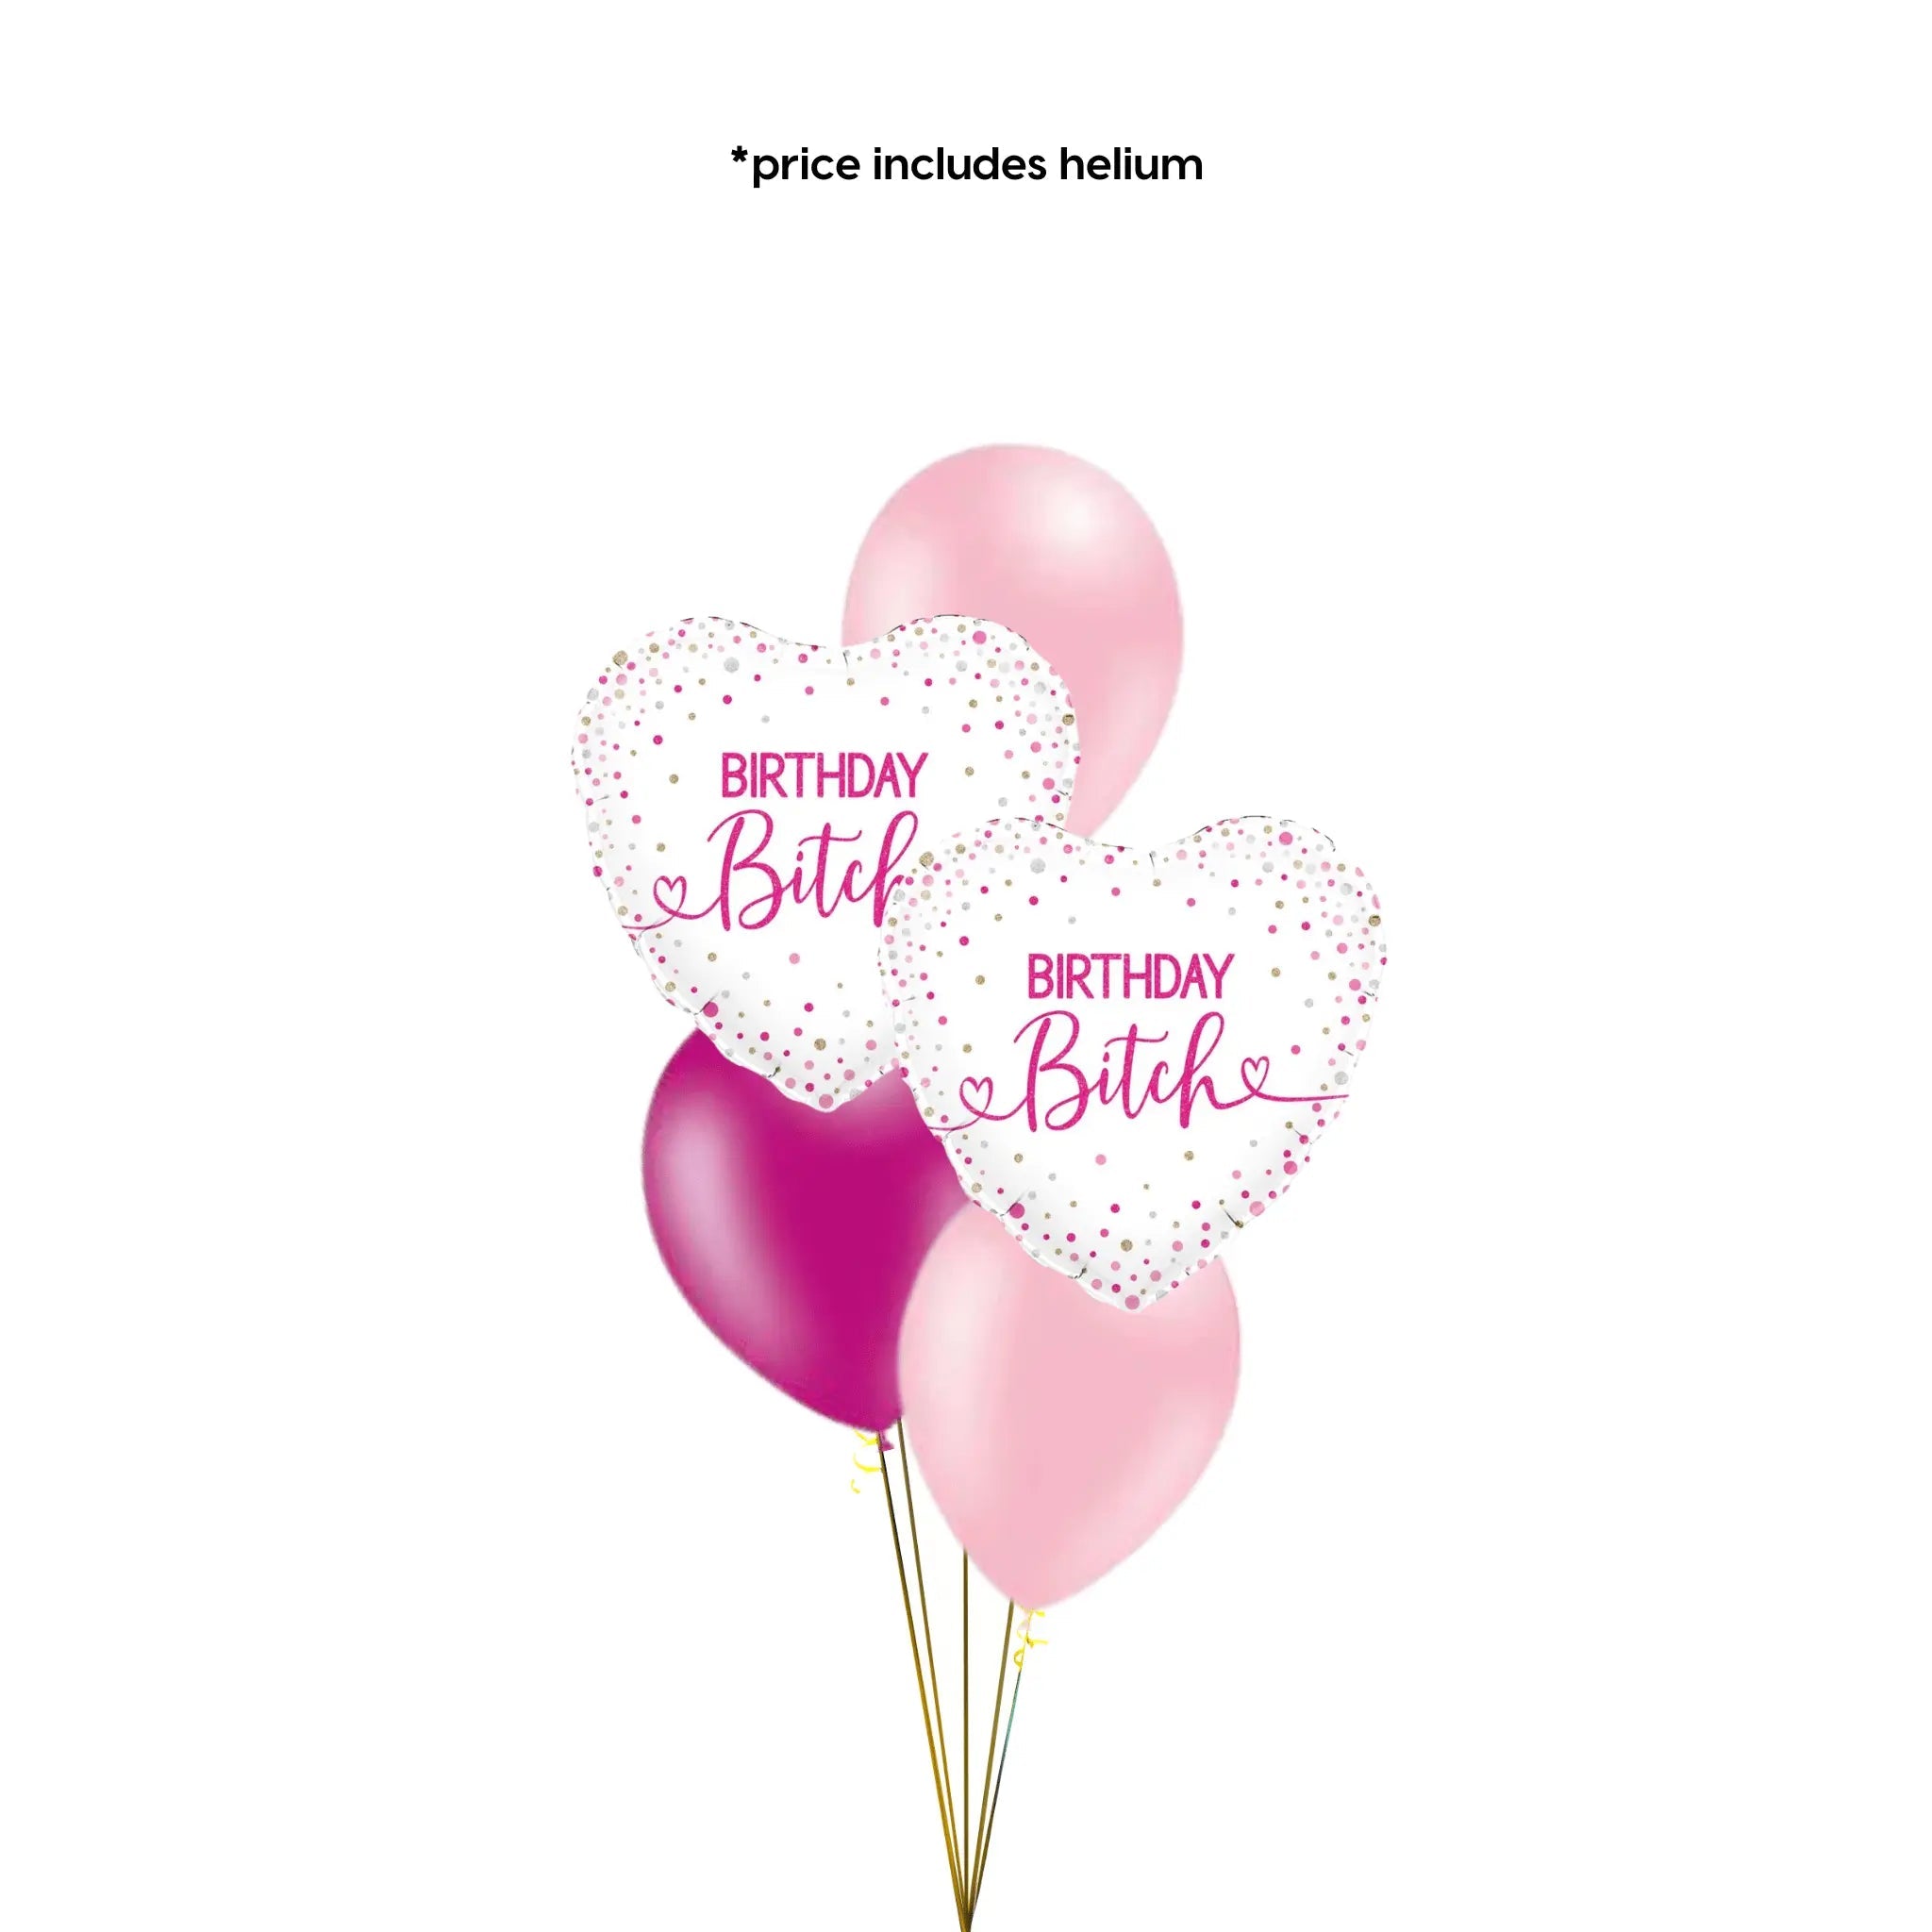 Birthday B***h Balloon Bouquet | The Party Hut